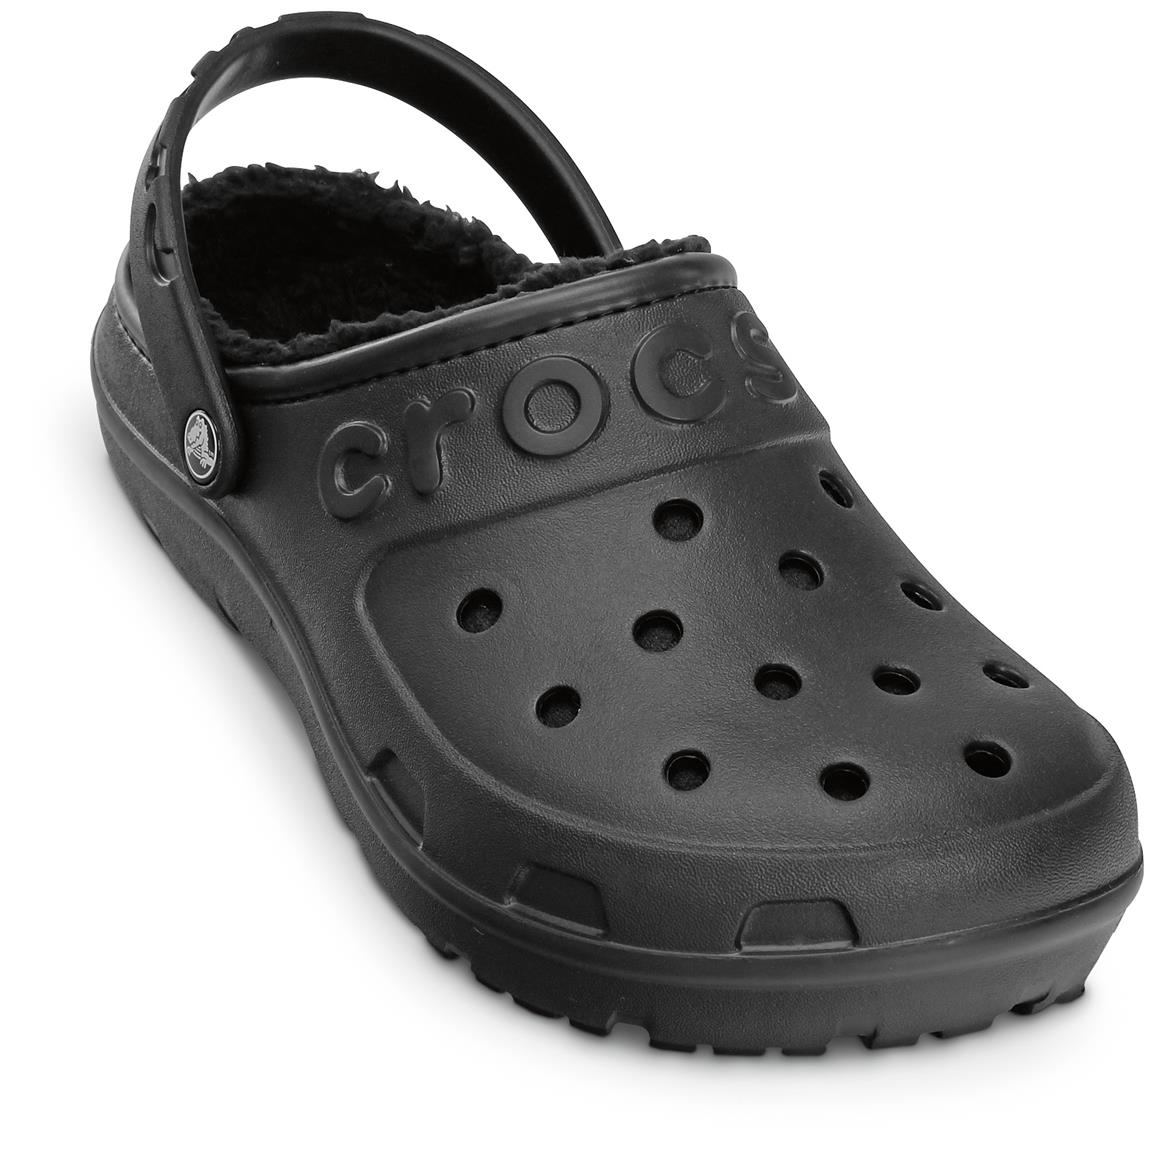 Crocs Men's Hilo Lined Clogs - 643770, Casual Shoes at Sportsman's Guide